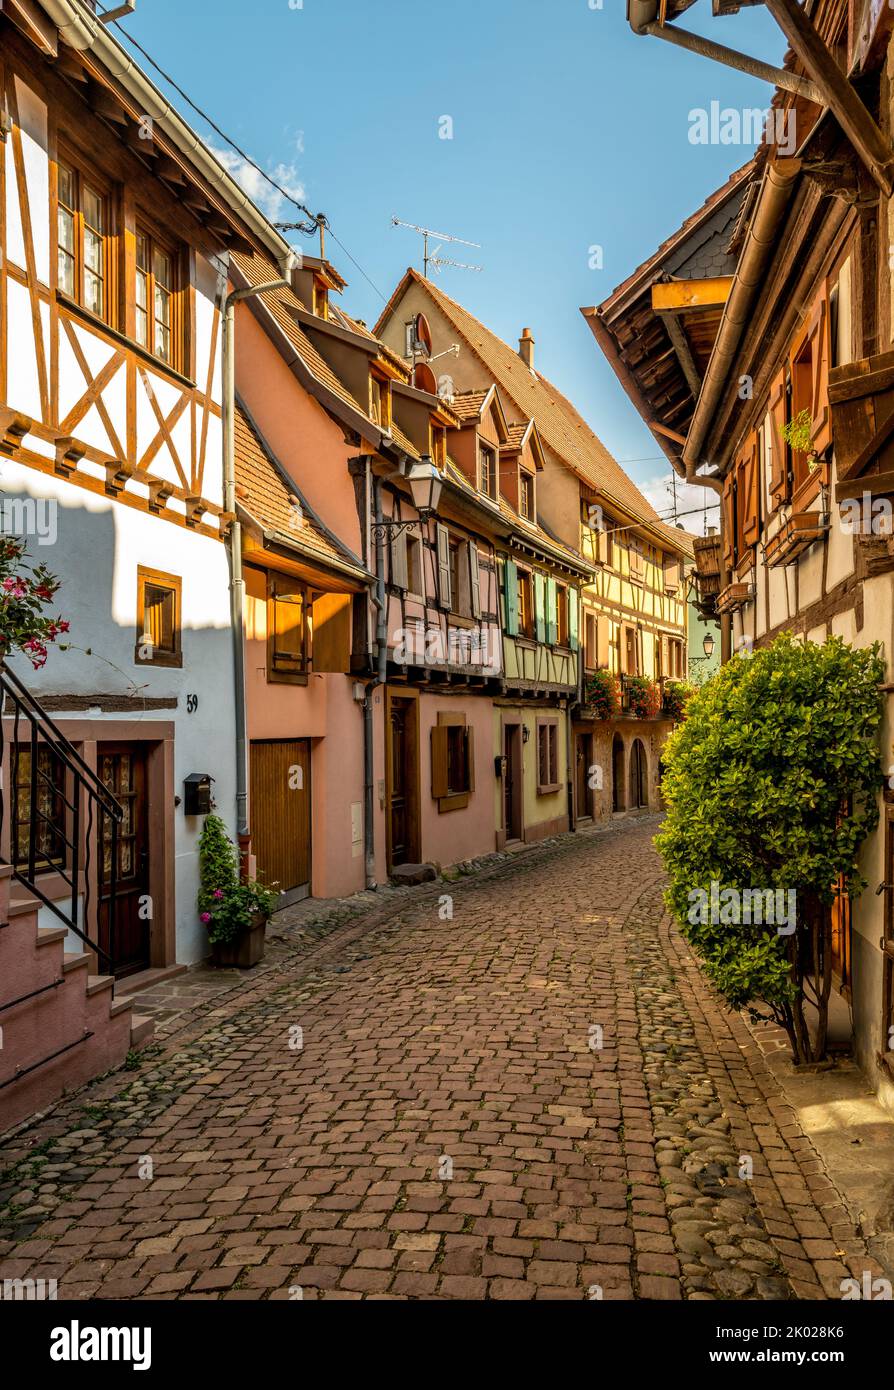 Street scene in Eguisheim, France Alsace Stock Photo